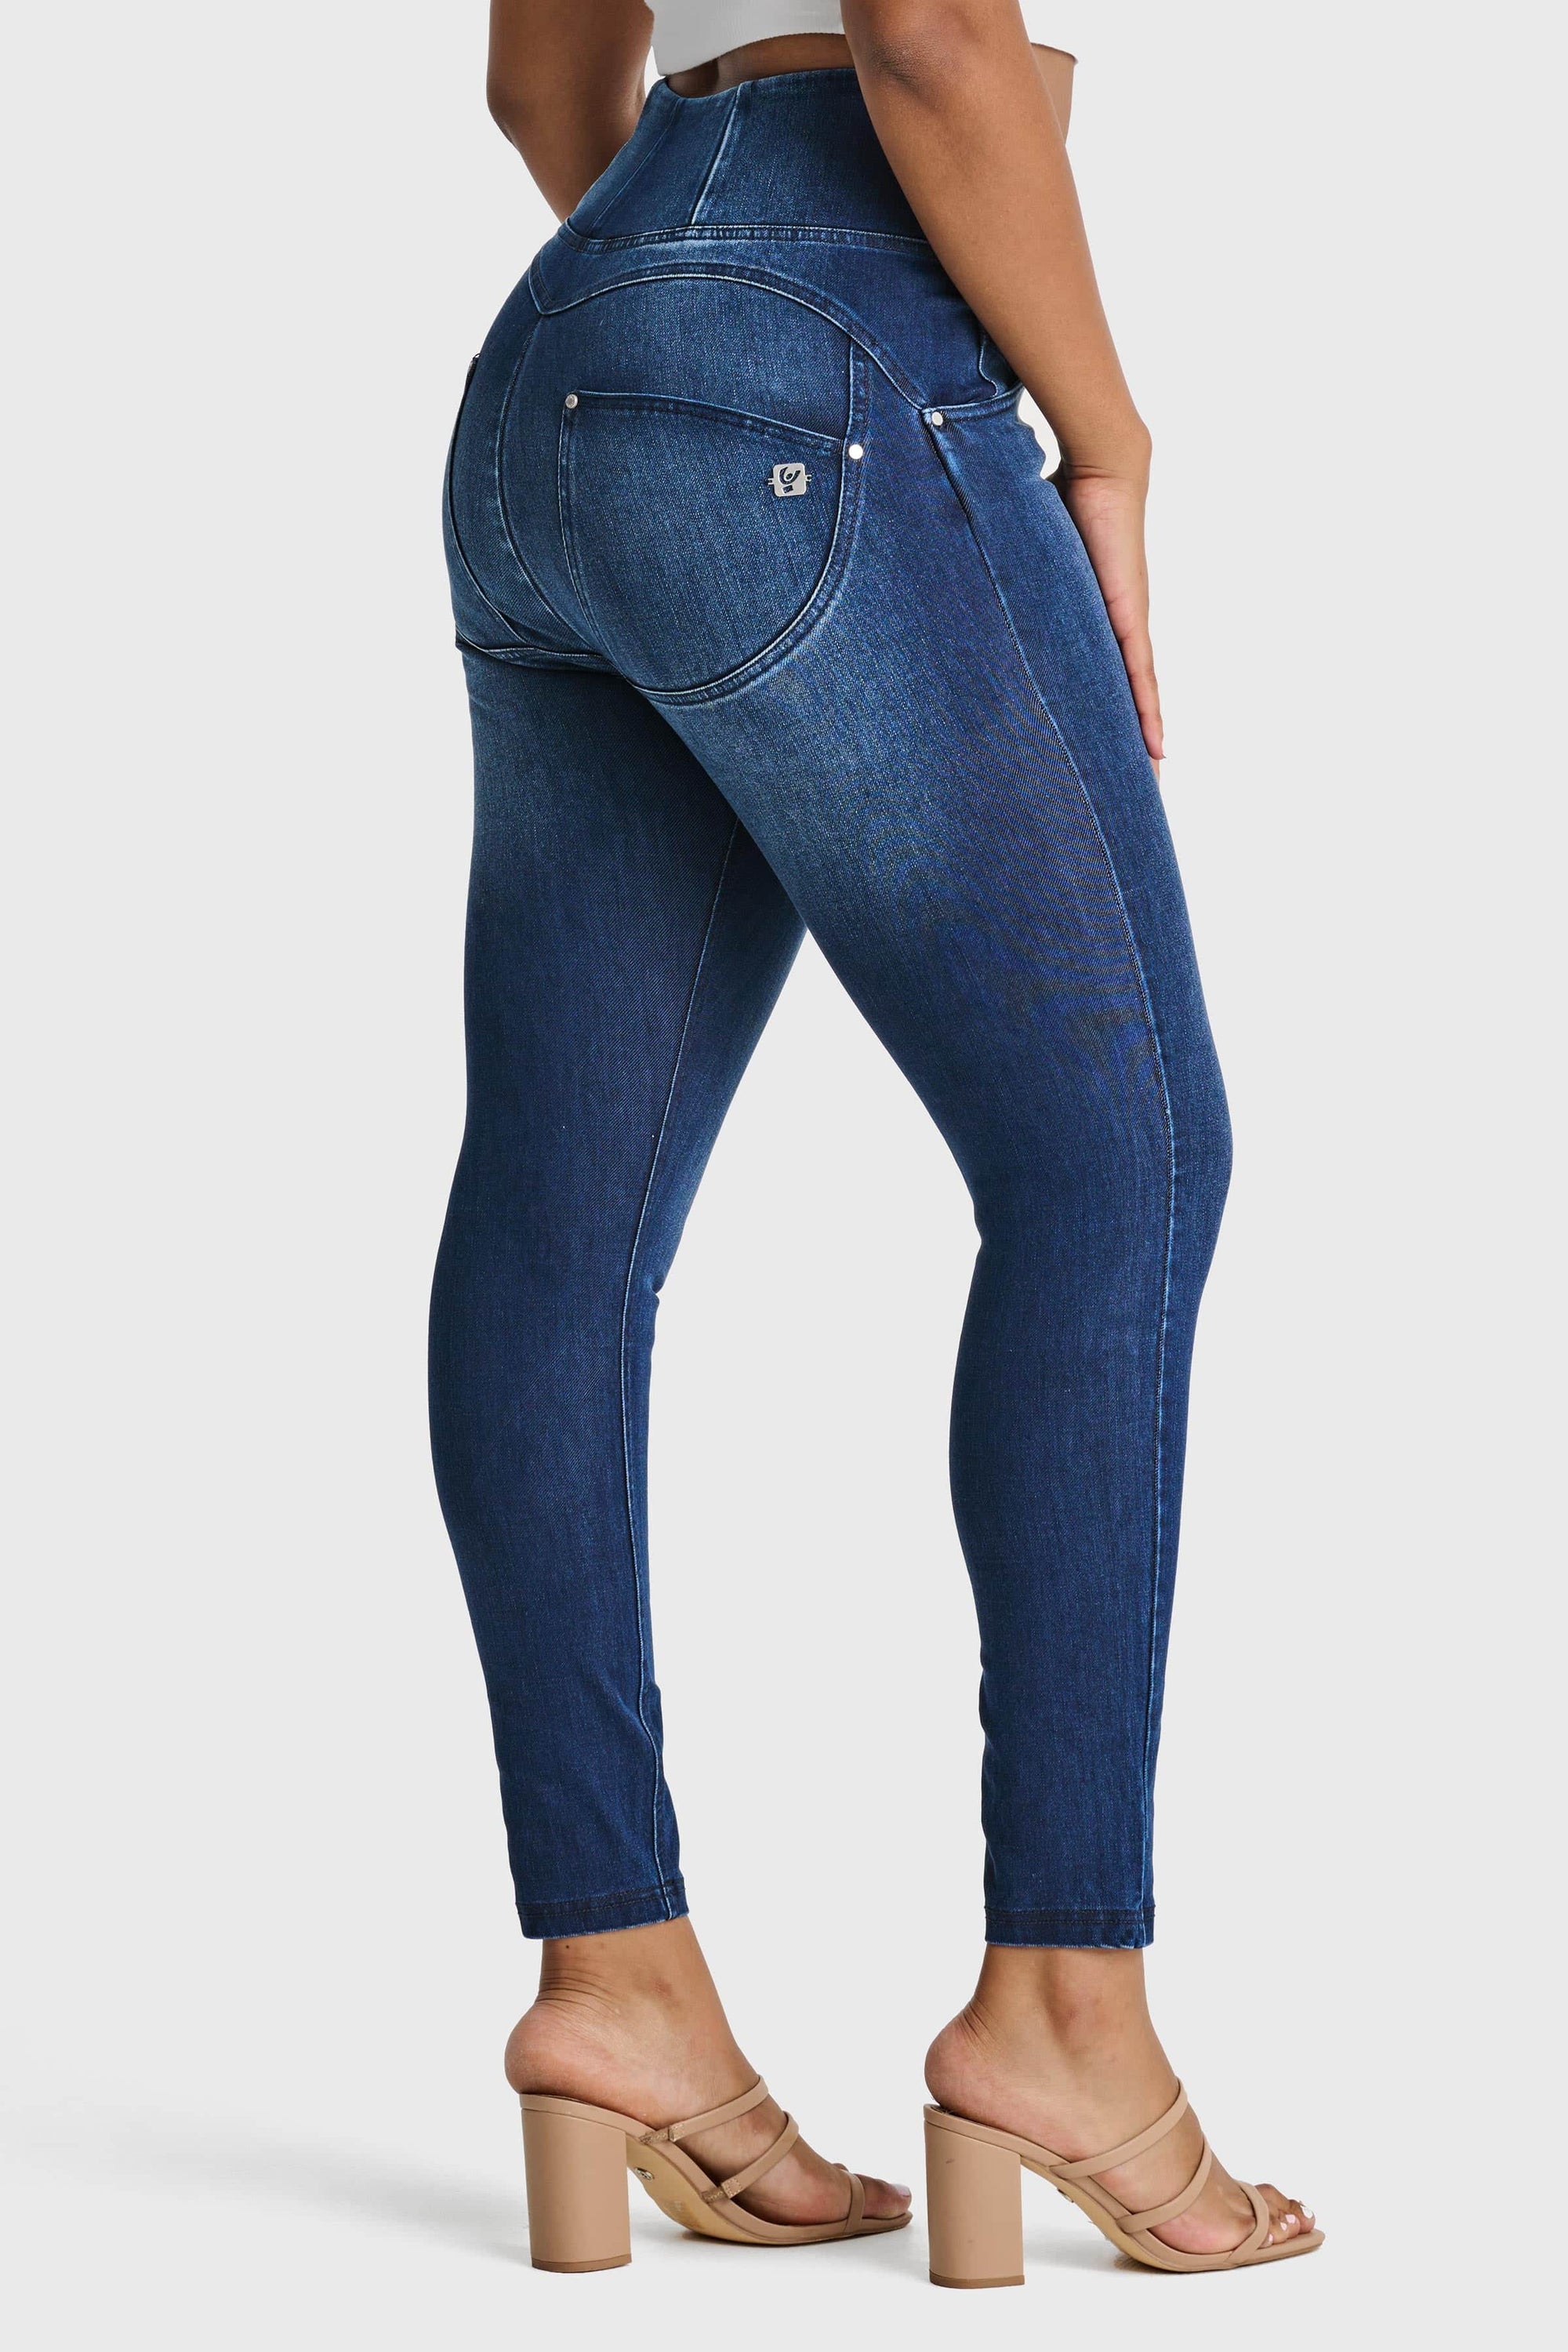 WR.UP® Snug Curvy Jeans - High Waisted - Full Length - Dark Blue + Blue Stitching 1